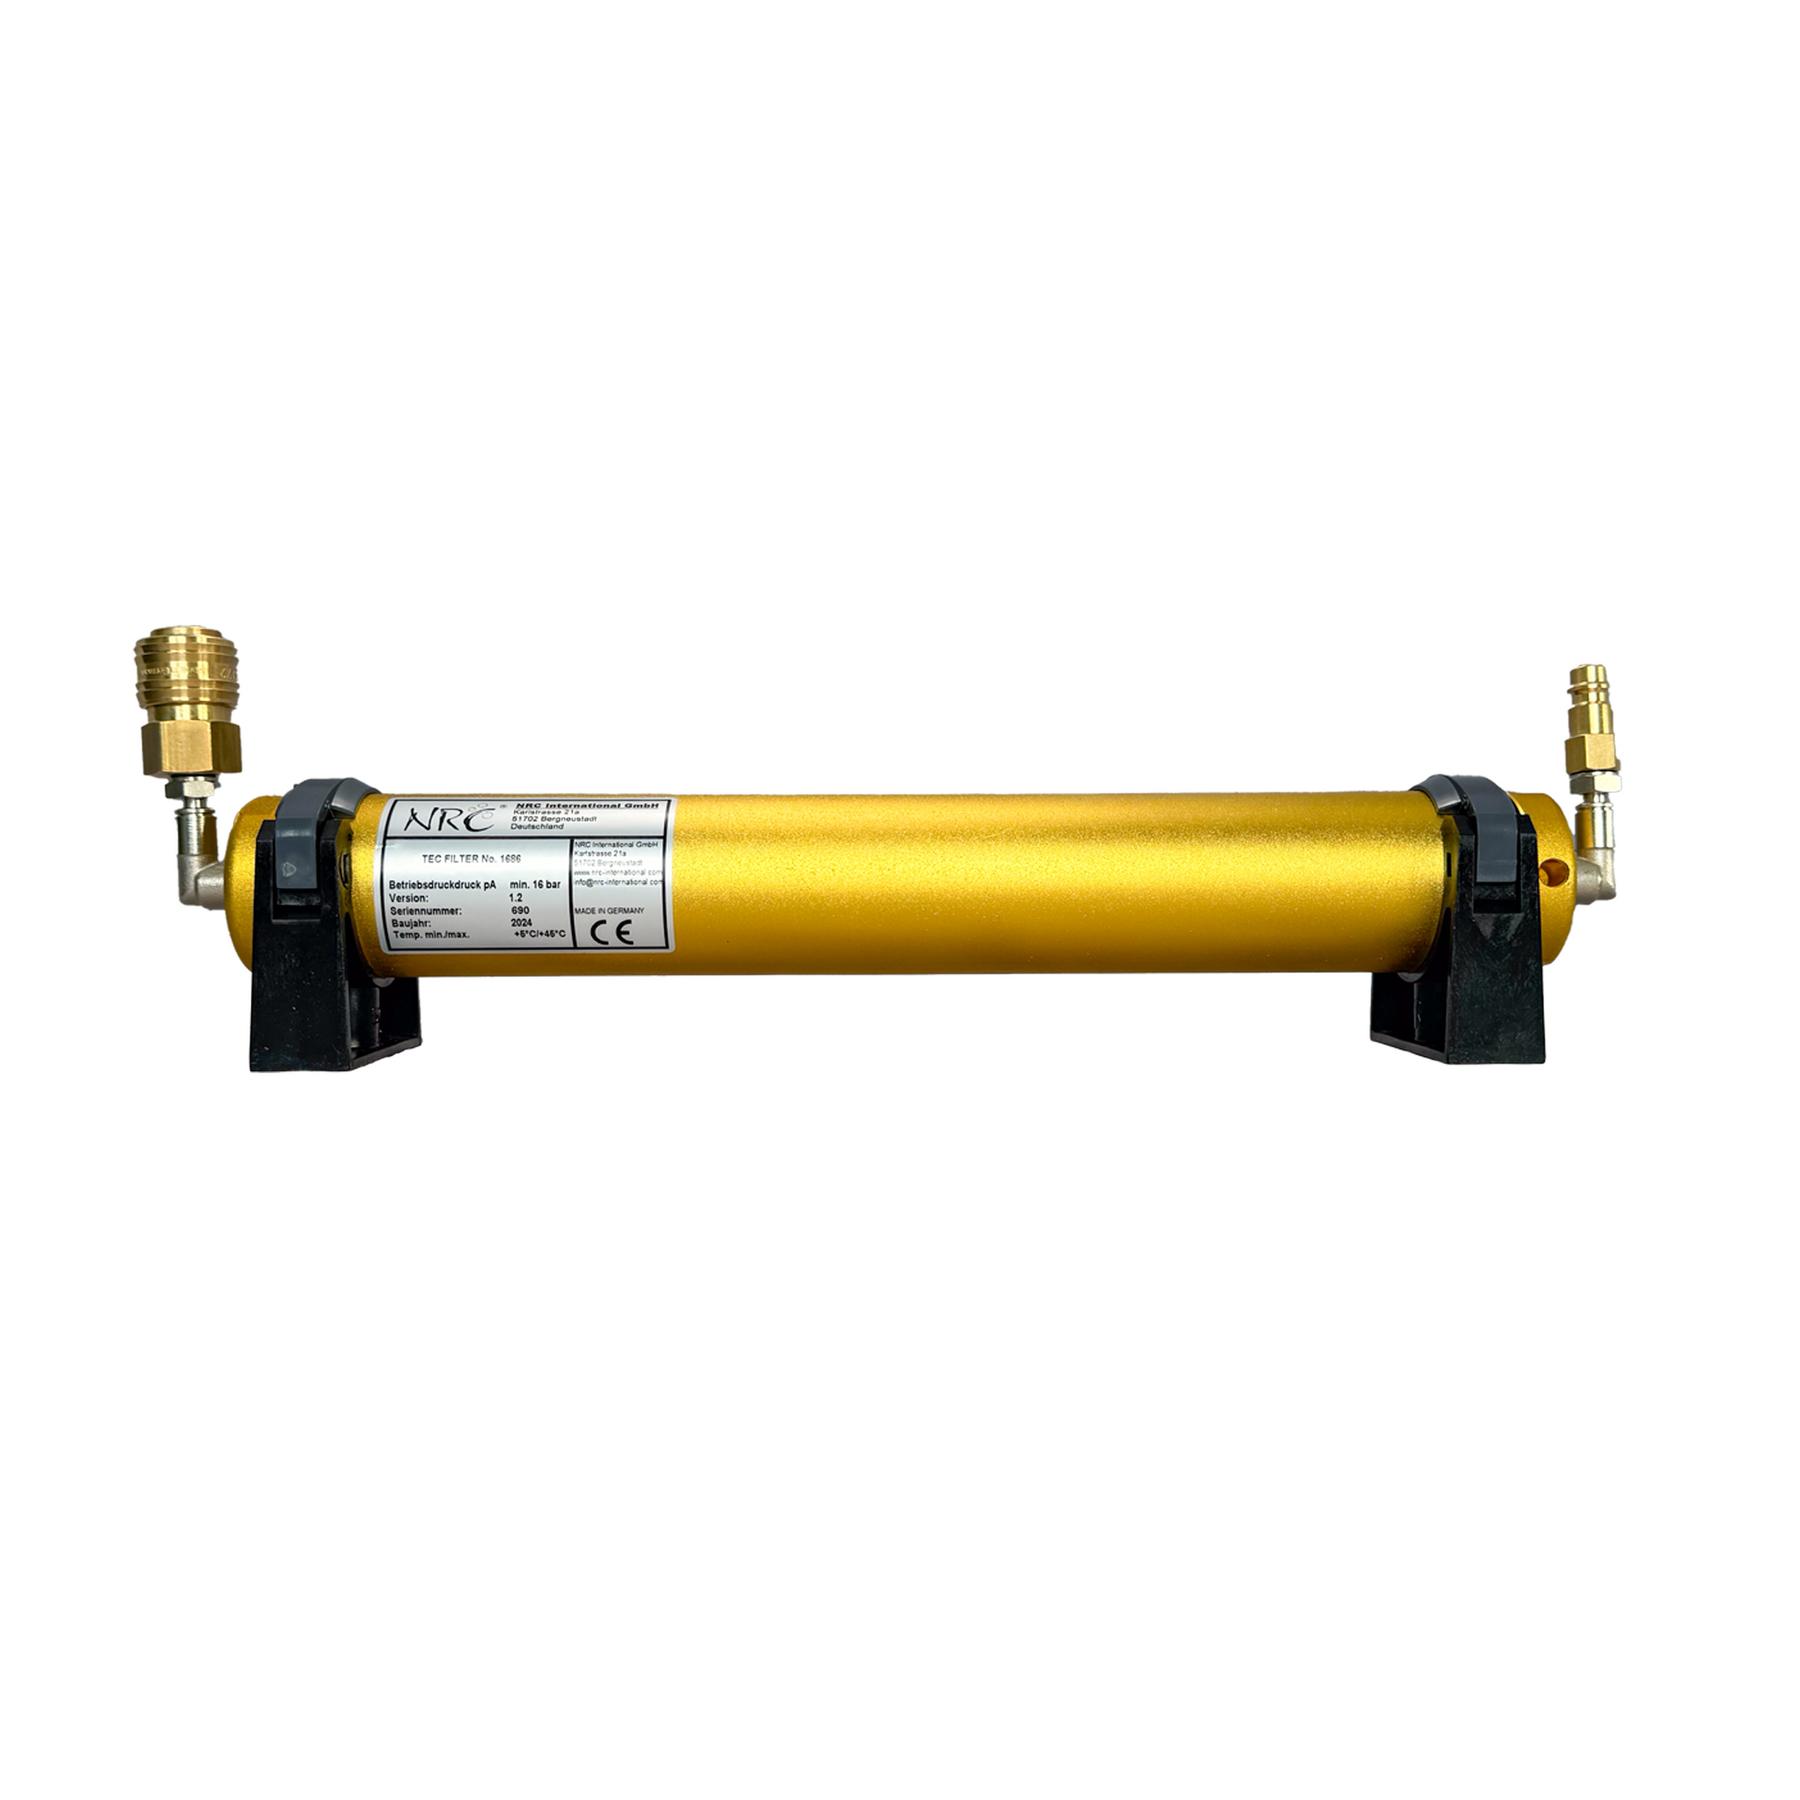 TEC filter for booster pumps